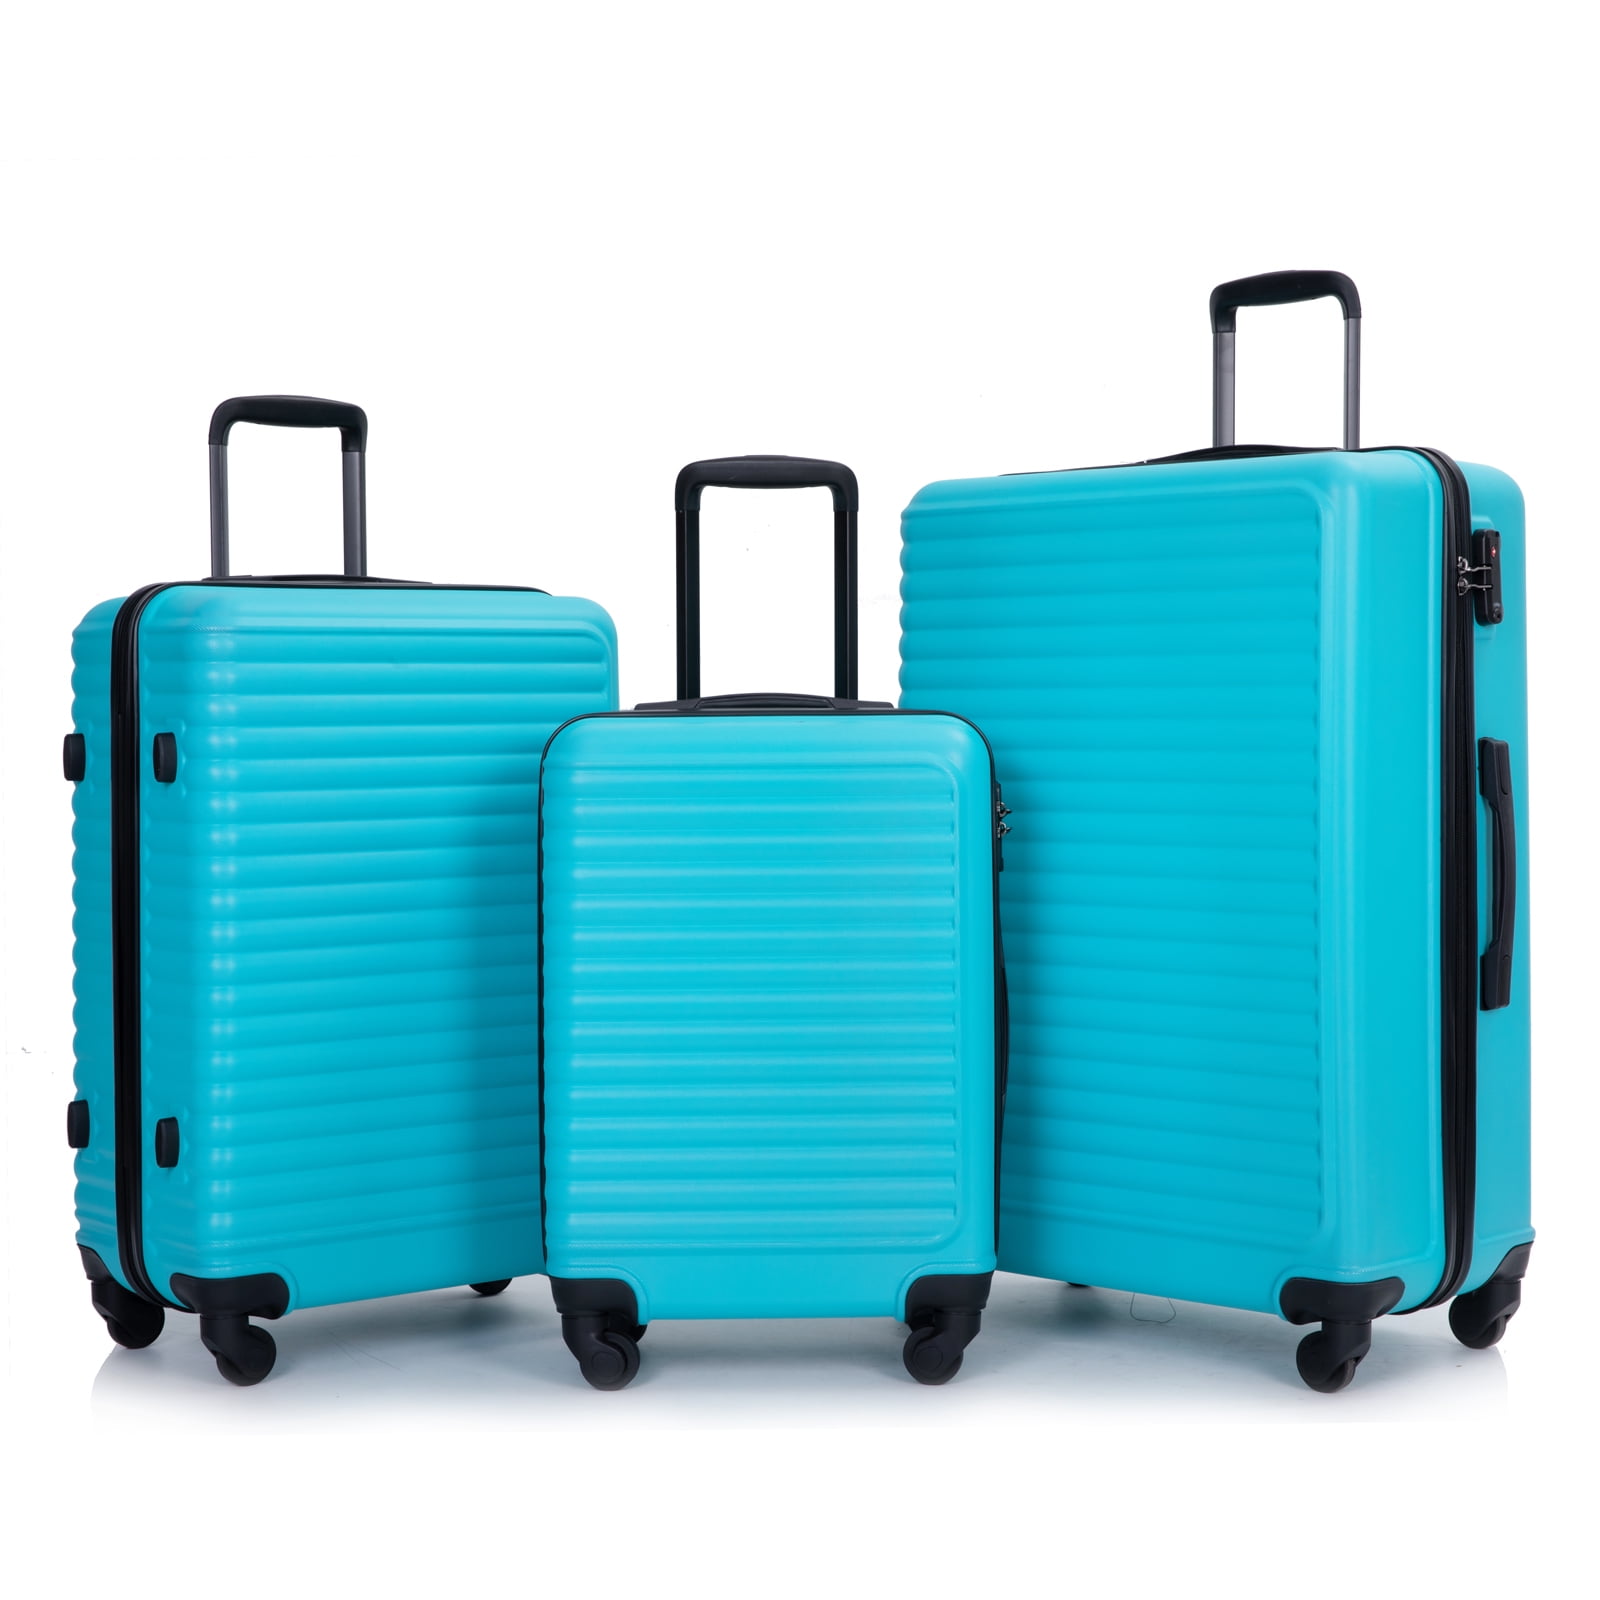  LEVEL8 Elegance Checked Luggage, 24 Inch Hardside Suitcase,  Lightweight PC Matte Hardshell with TSA Lock, Spinner Wheels - Light Blue